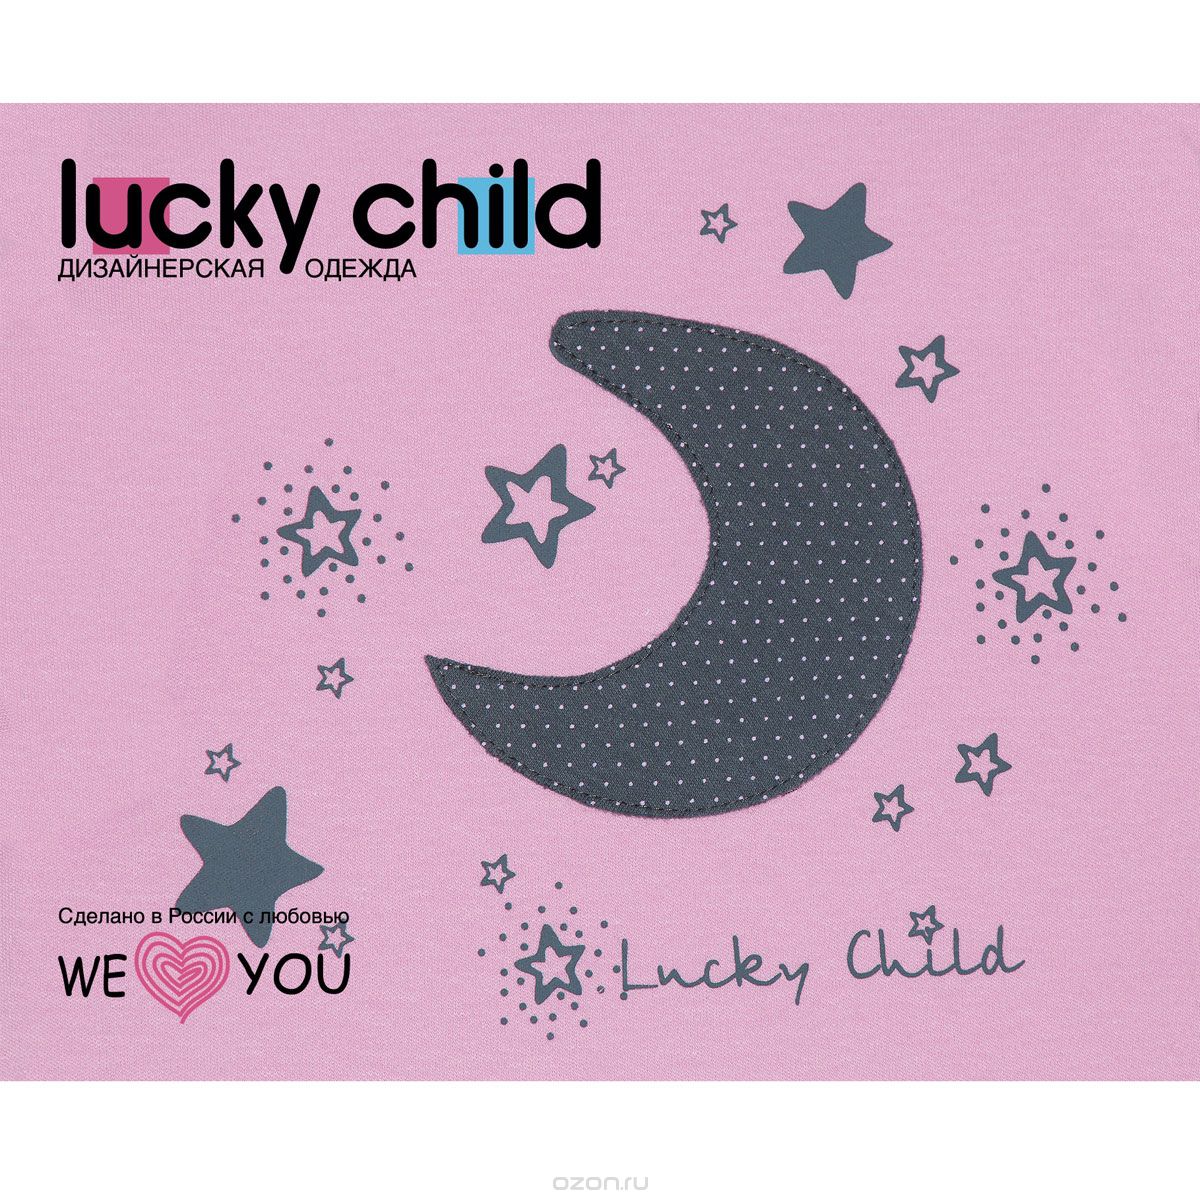    Lucky Child: , , : -, . 12-411.  116/122